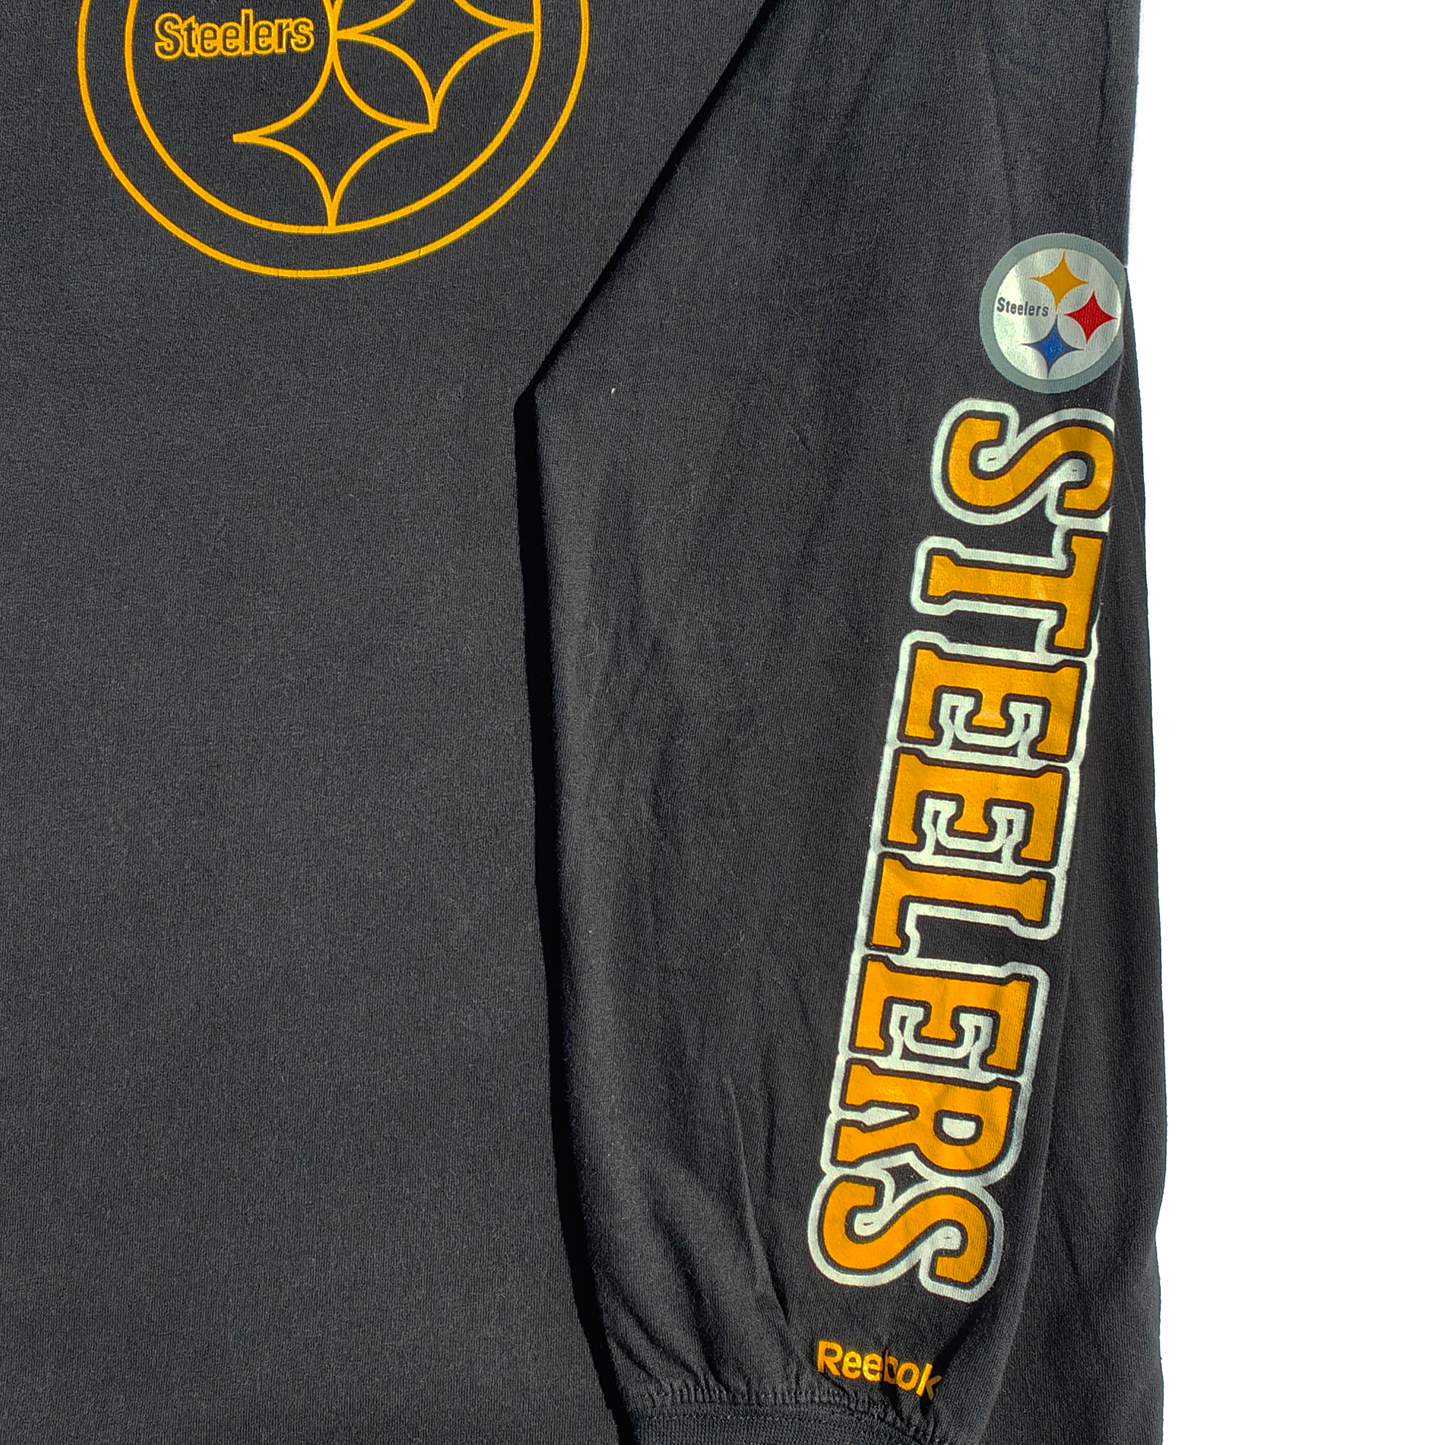 Pittsburgh Steelers Reebok Longsleeve T Shirt - LARGE